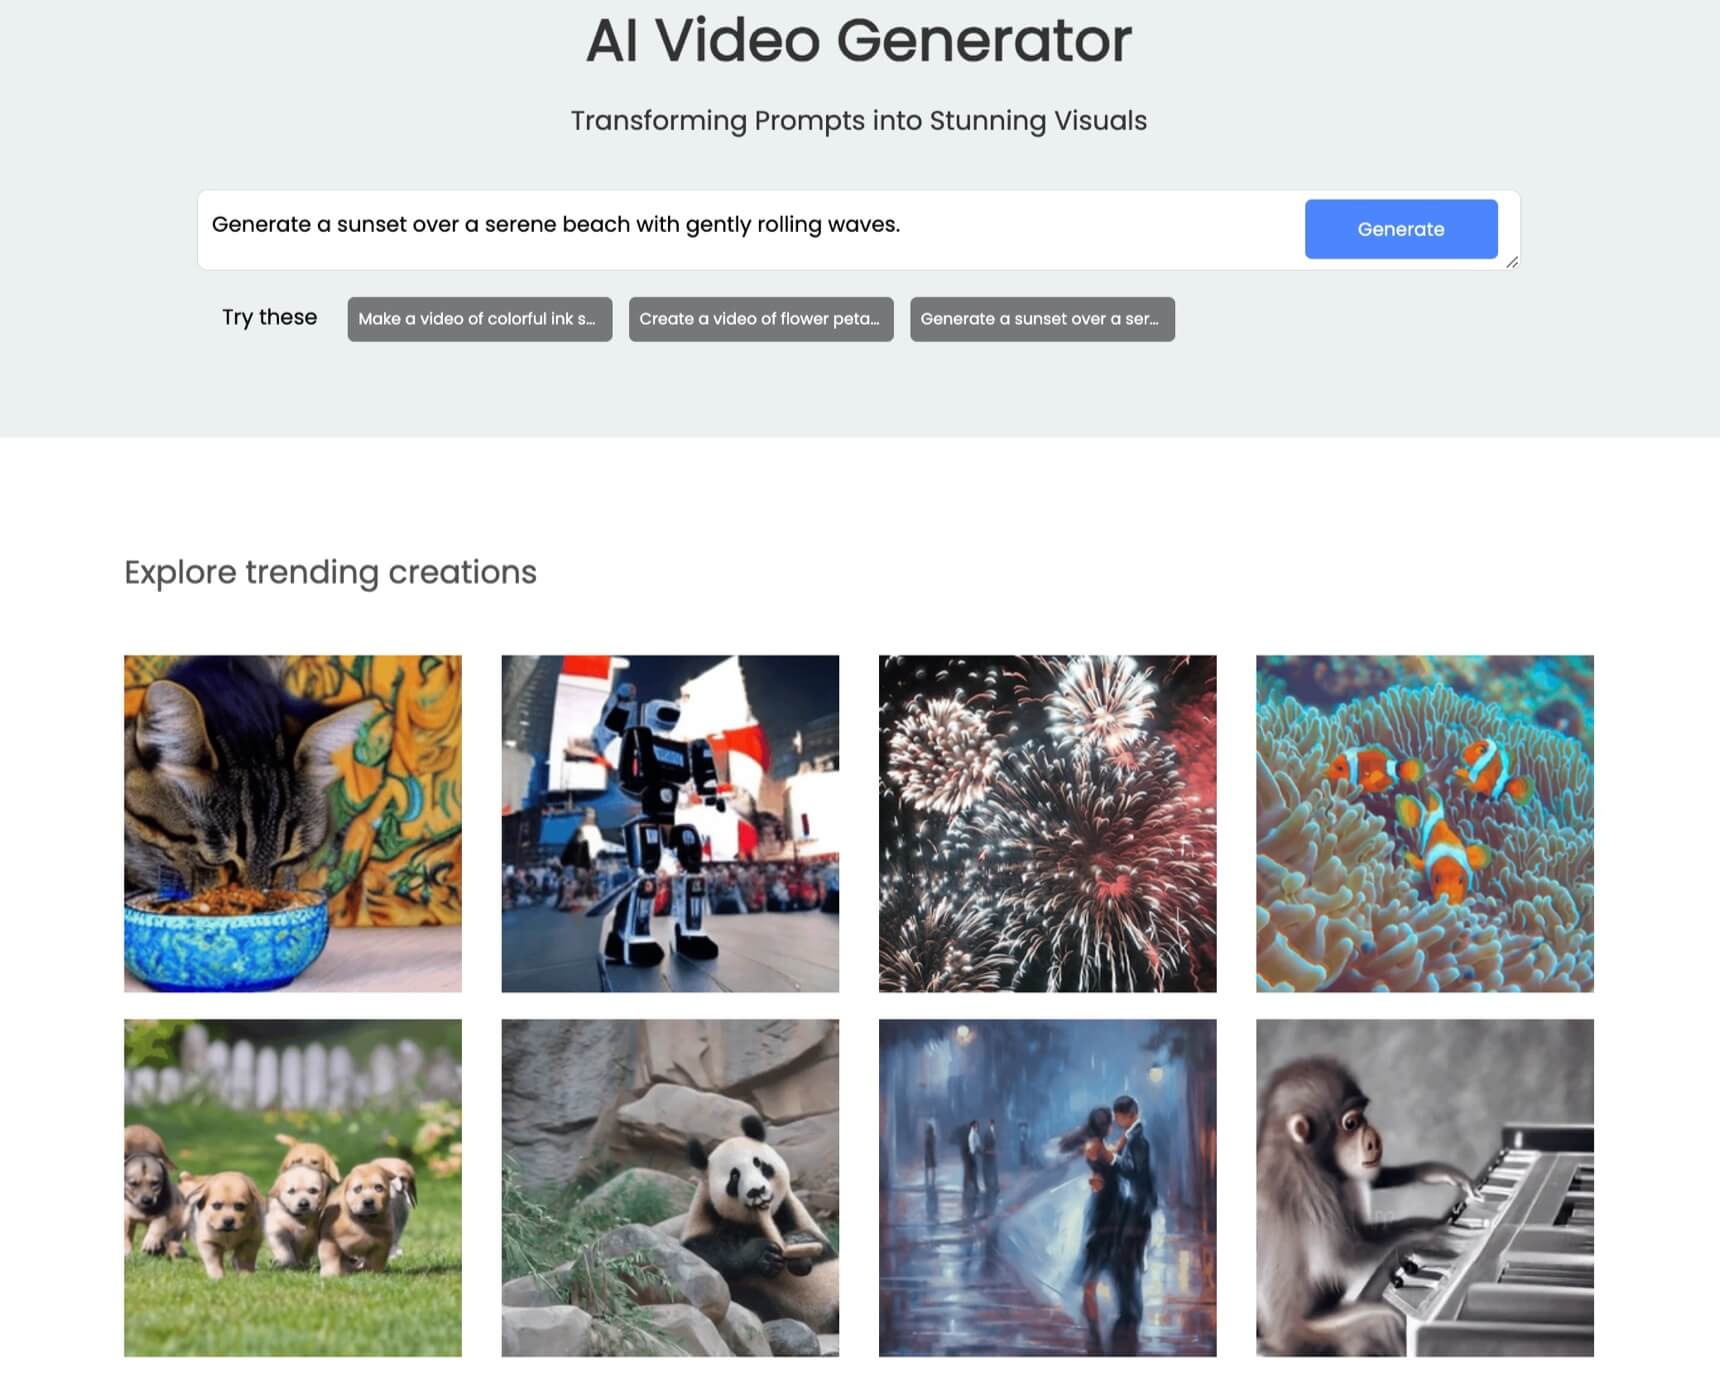 AI Video Generator